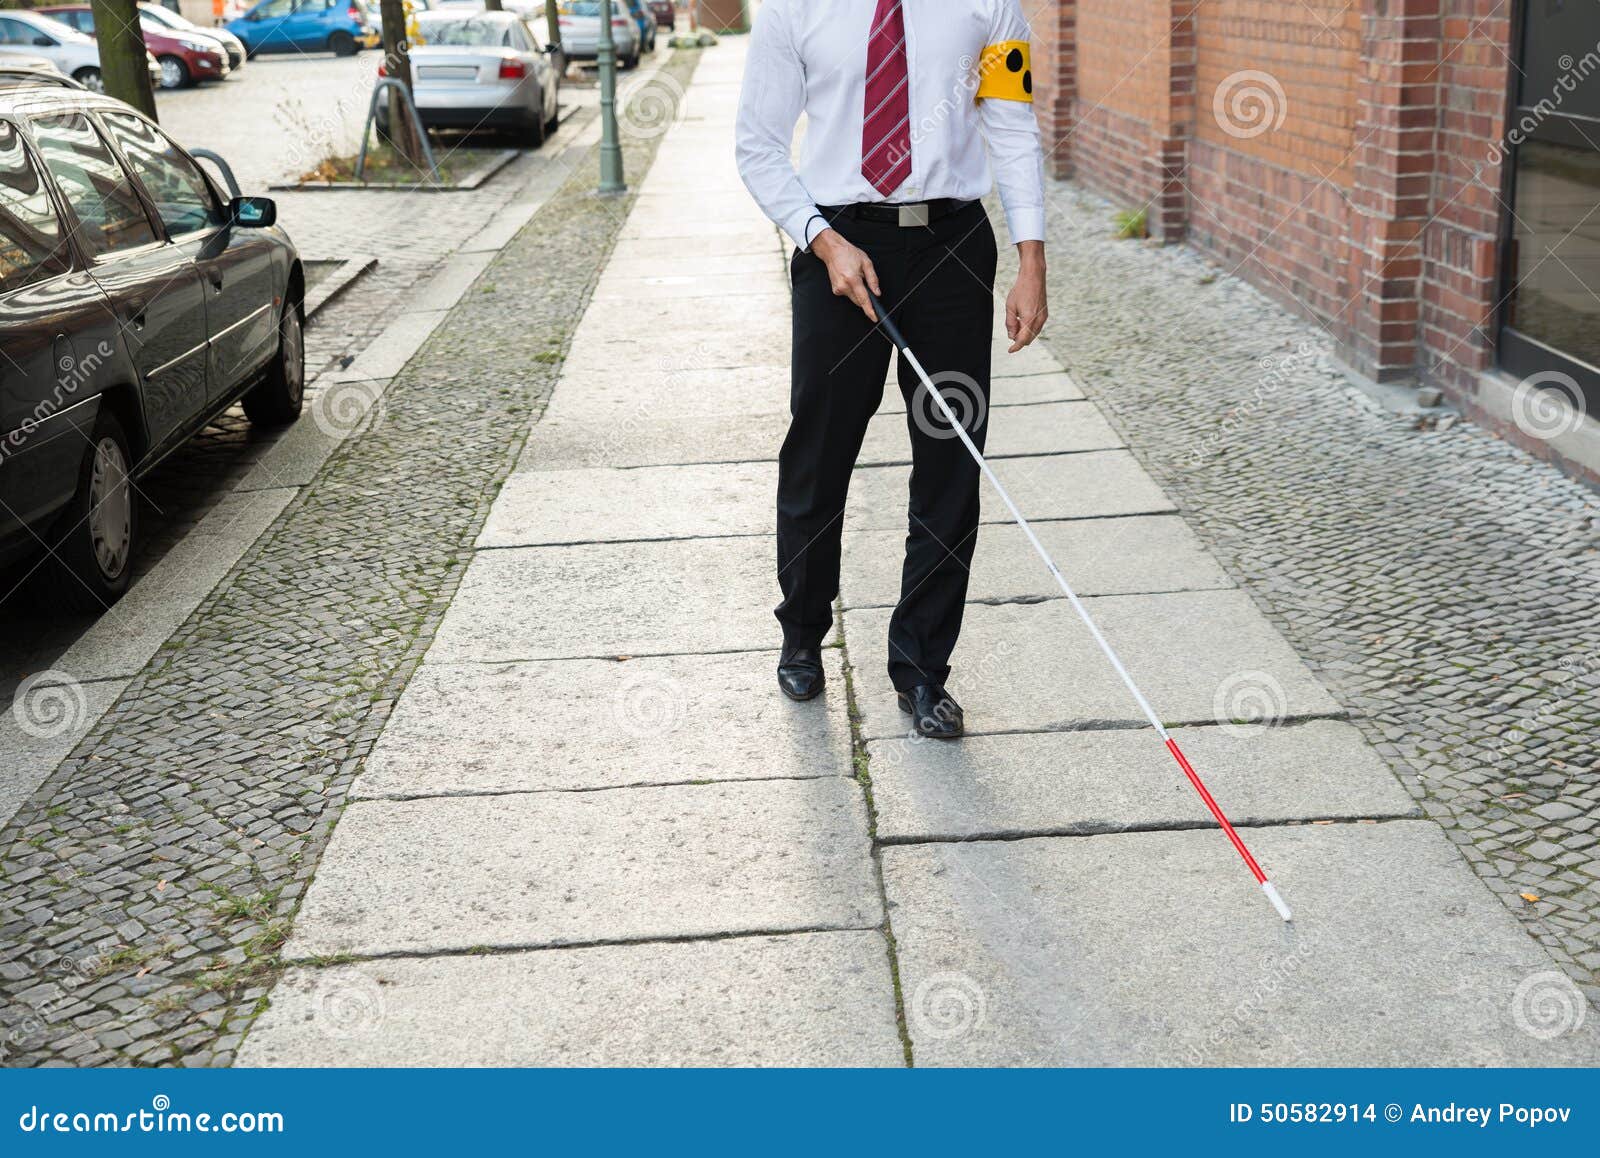 blind man walking on sidewalk